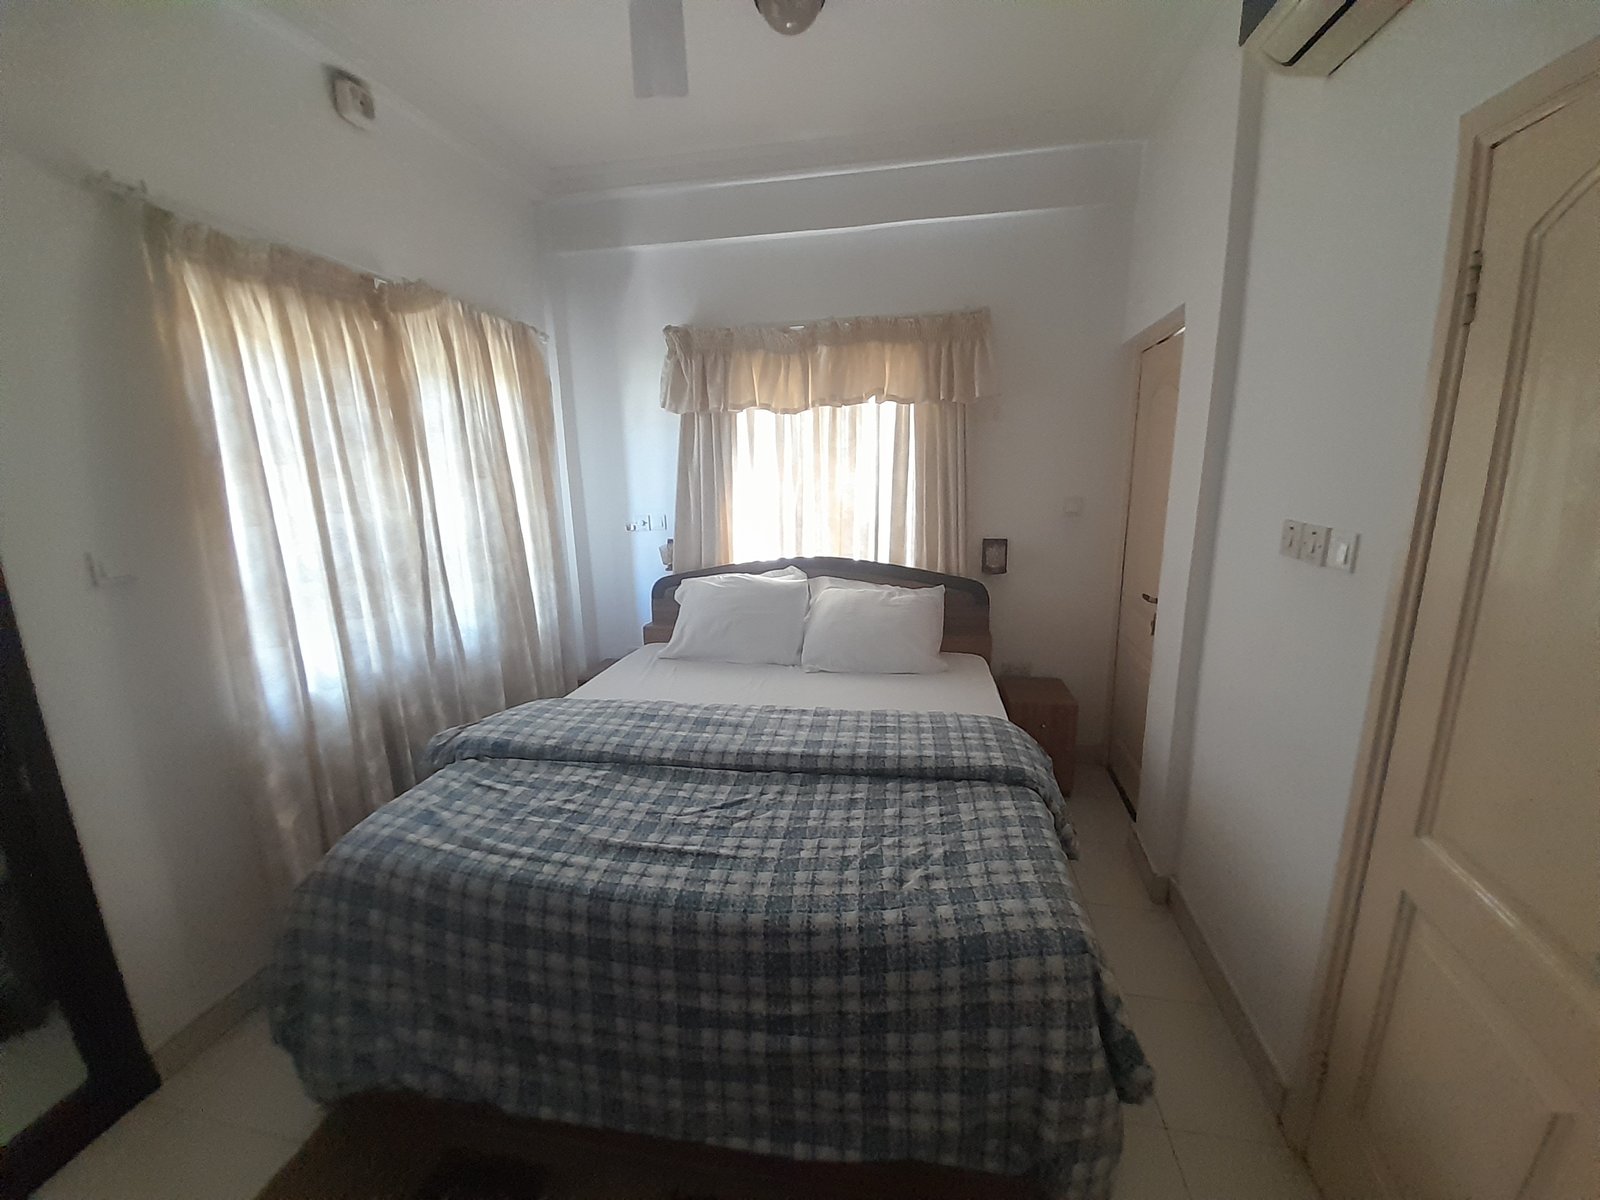 3 Bedroom Fully Furnished For Rent